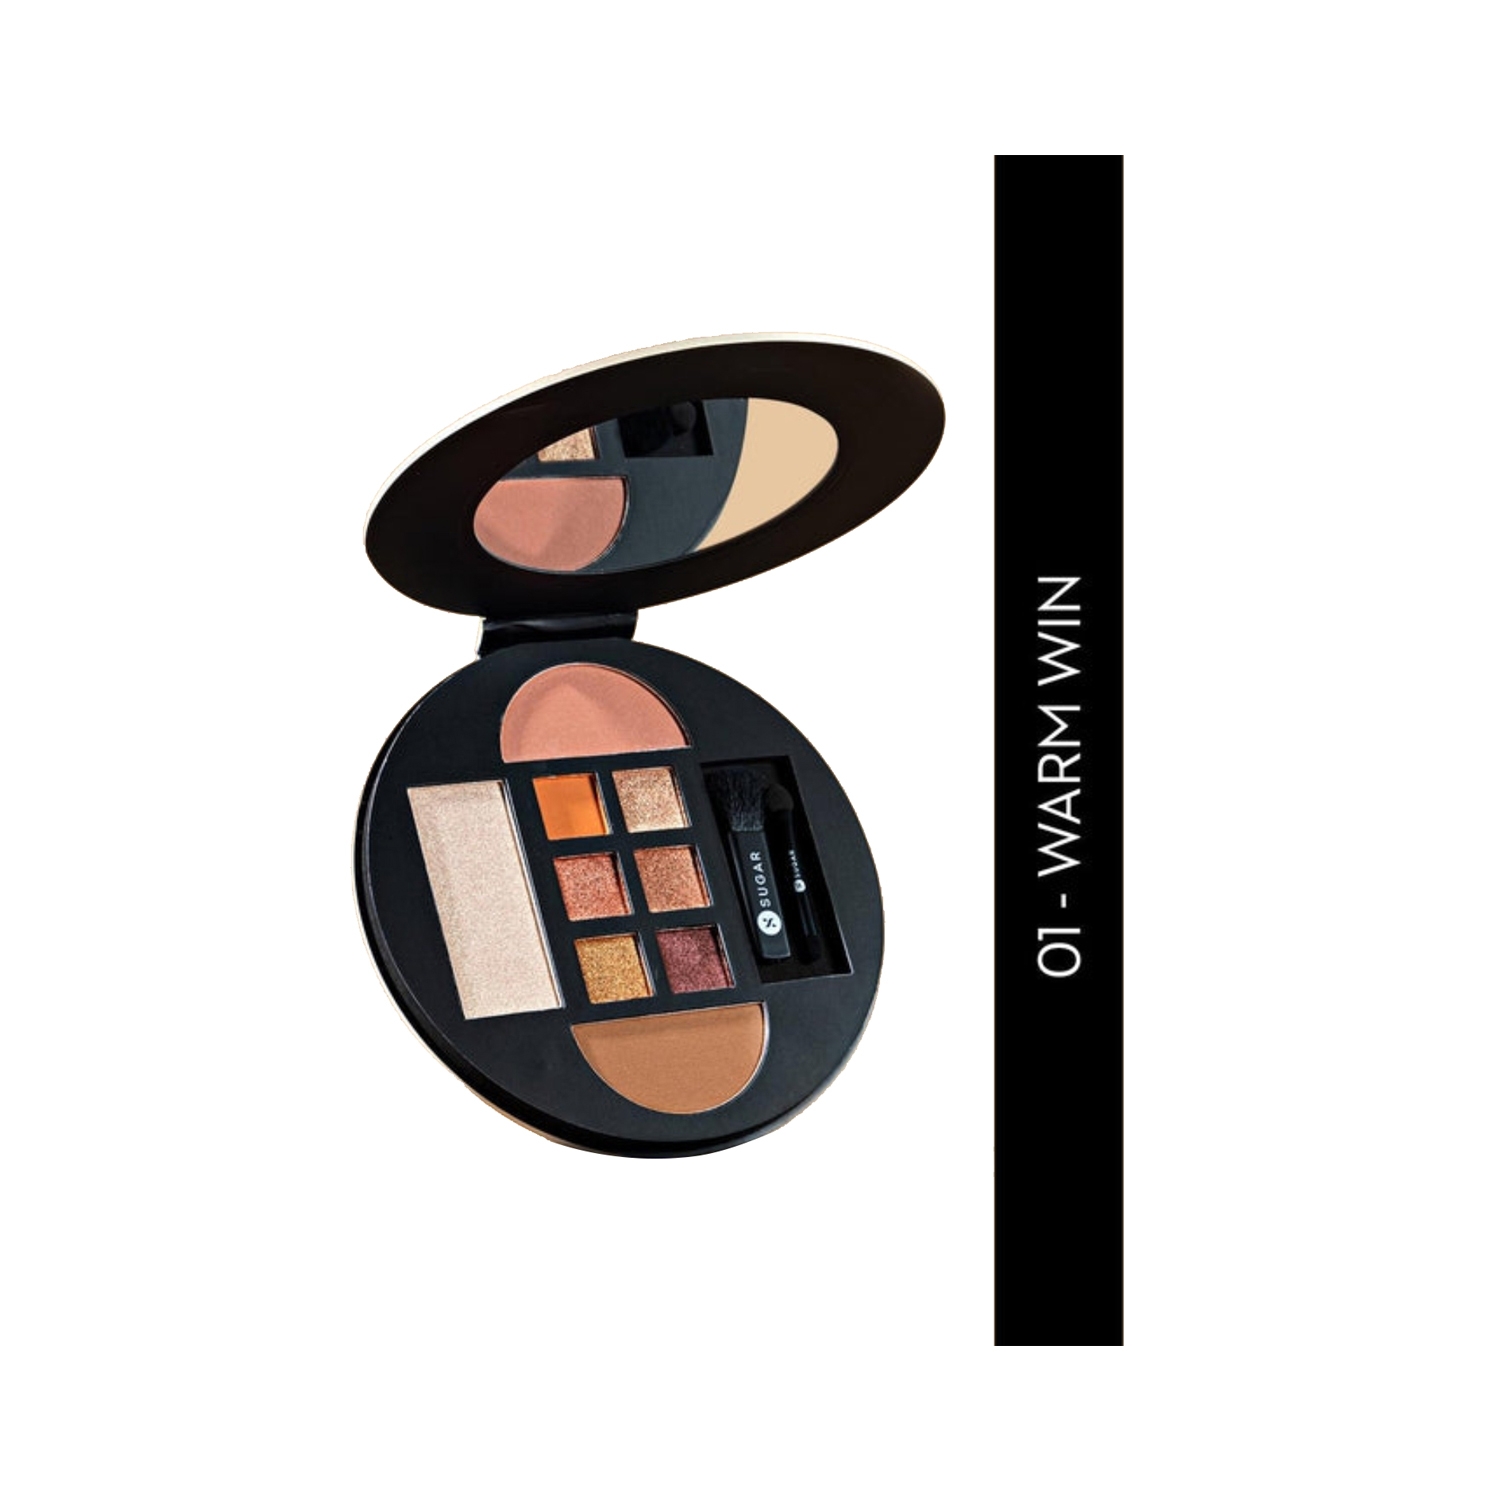 SUGAR Cosmetics | SUGAR Cosmetics Contour De Force Eyes And Face Palette - 01 Warm Win (20.3g)